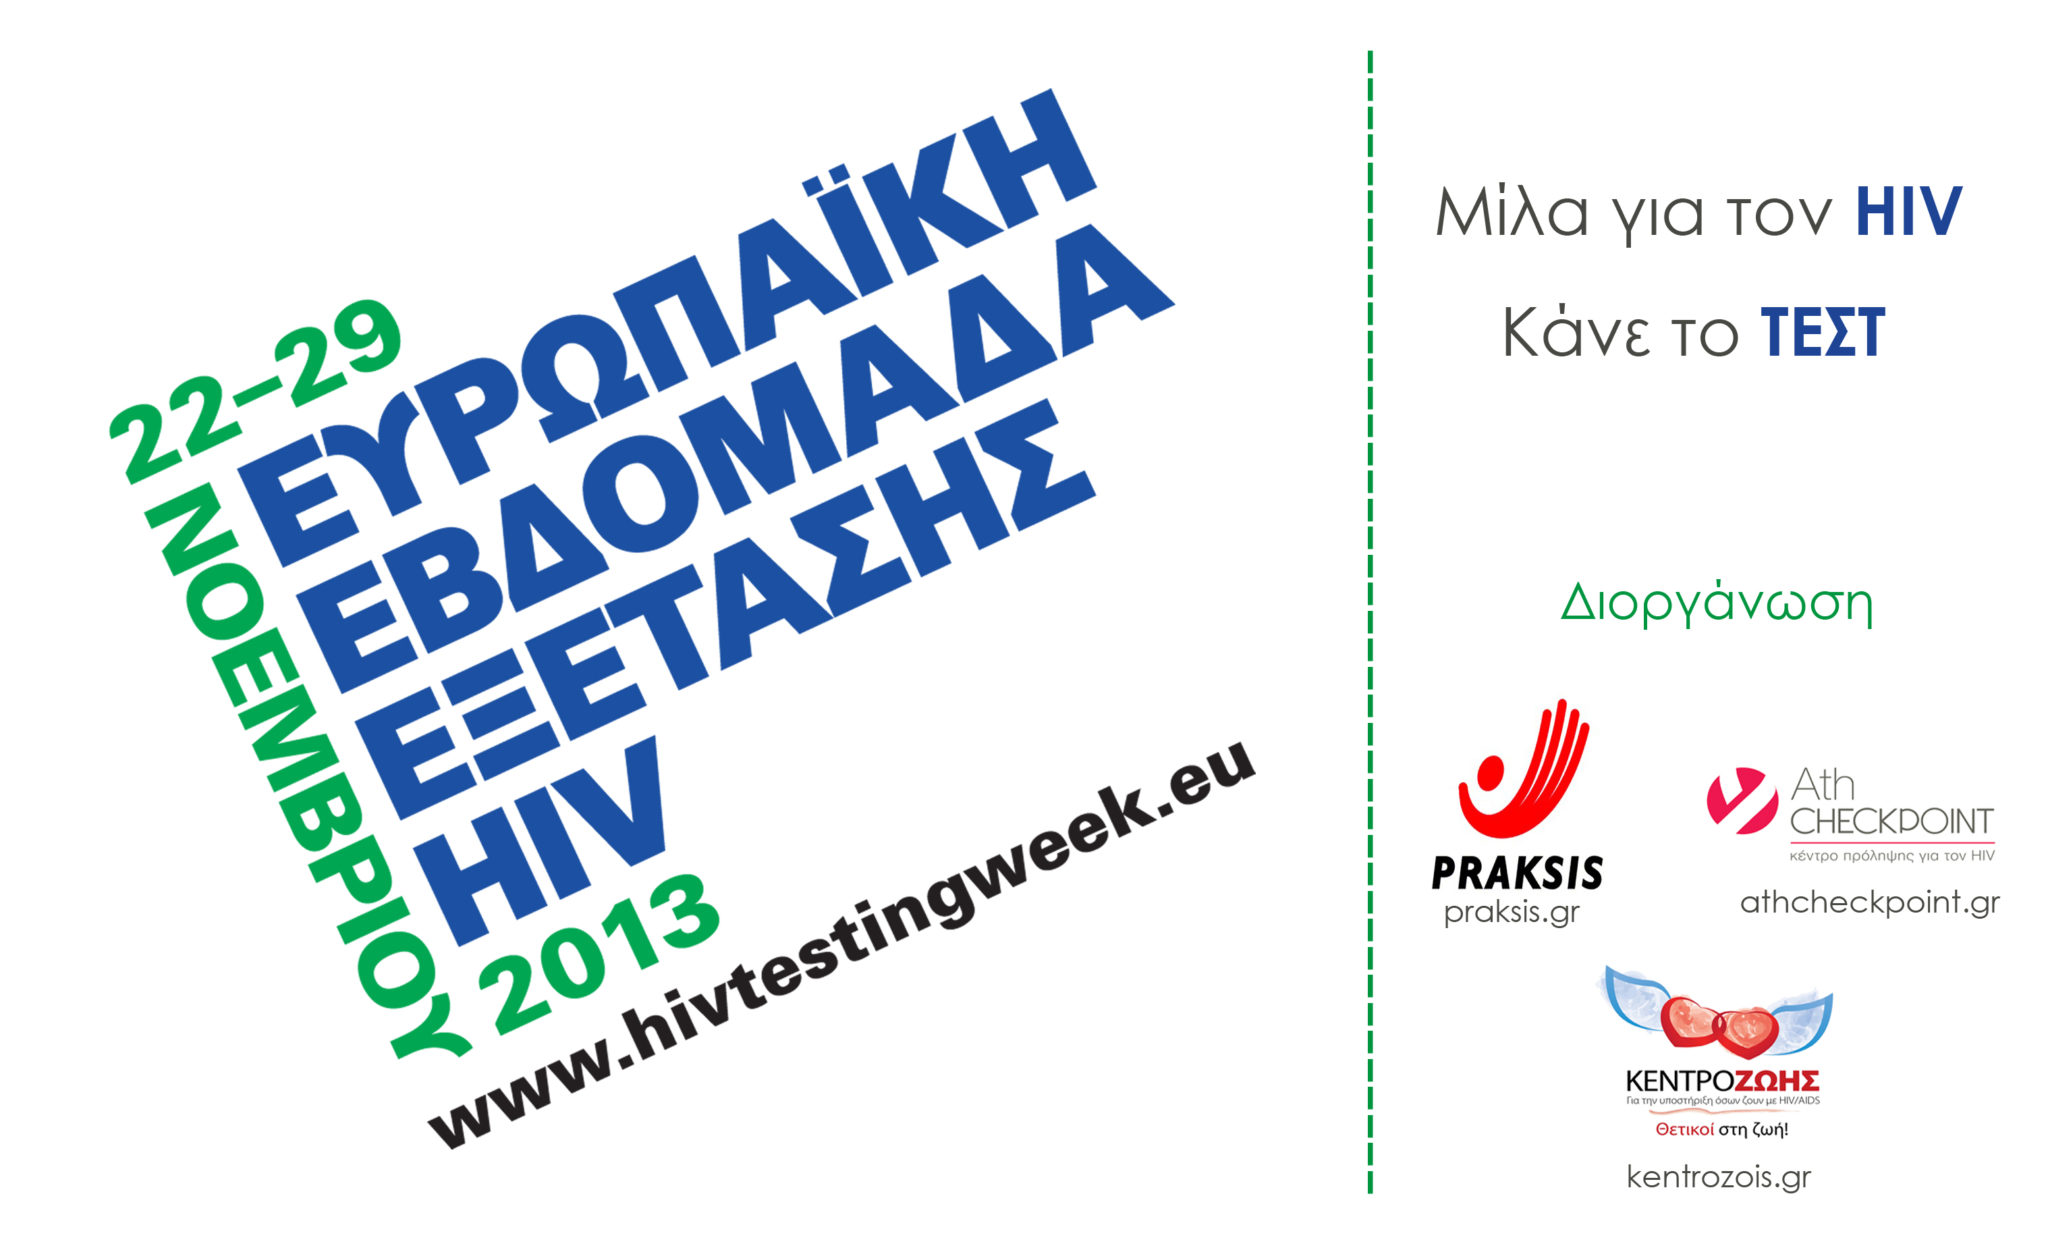 Featured image for “22-29 ΝΟΕΜΒΡΙΟΥ ΕΥΡΩΠΑΪΚΗ ΕΒΔΟΜΑΔΑ ΕΞΕΤΑΣΗΣ HIV”